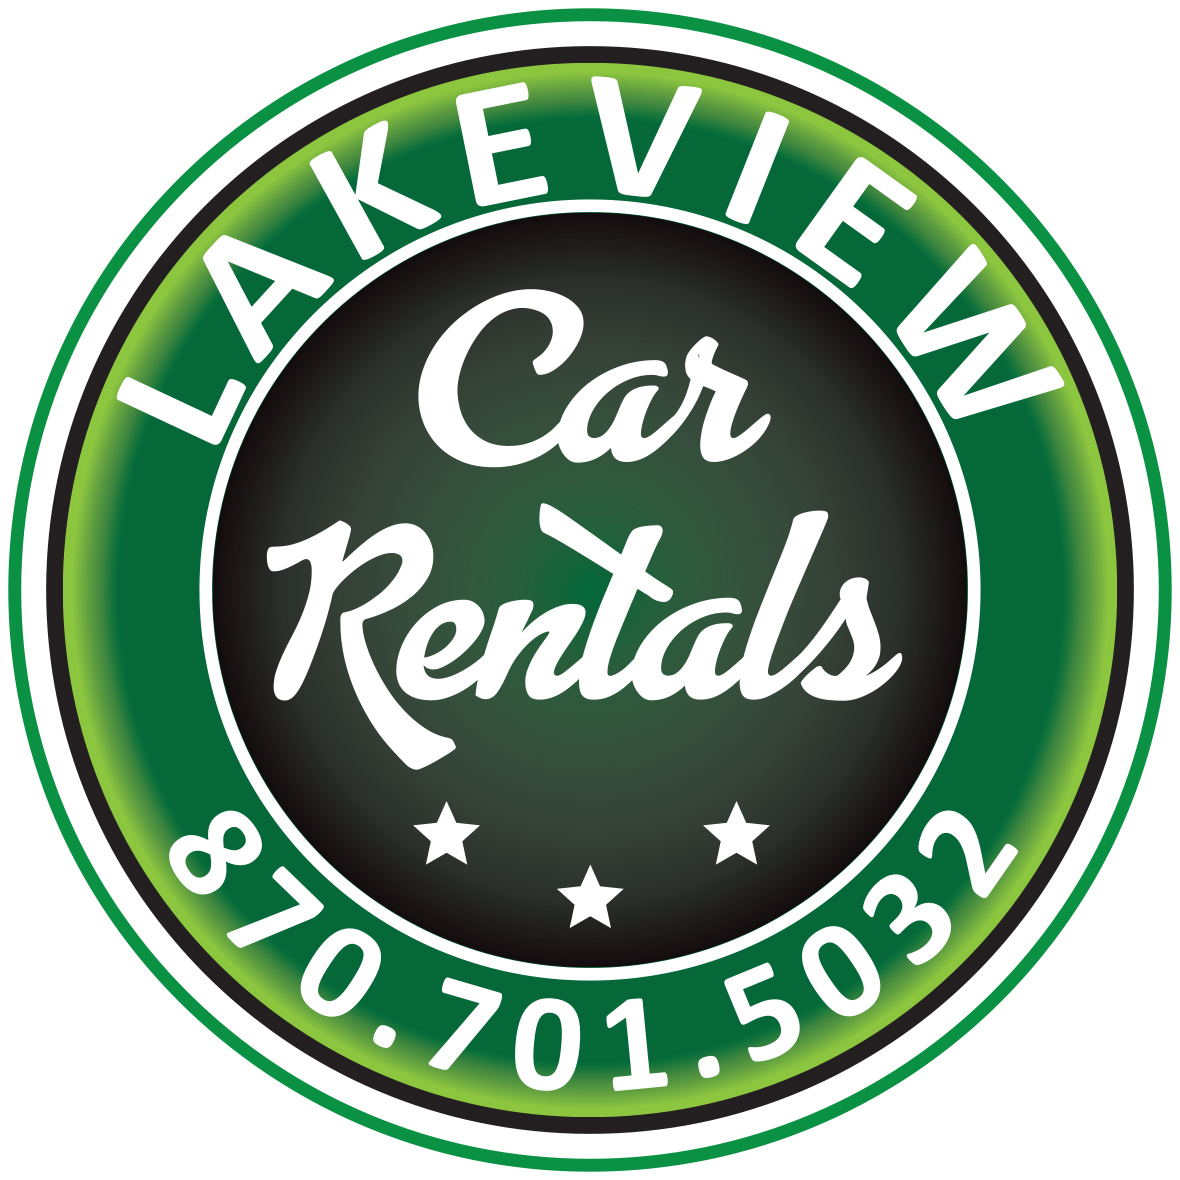 Lakeview Car Rentals